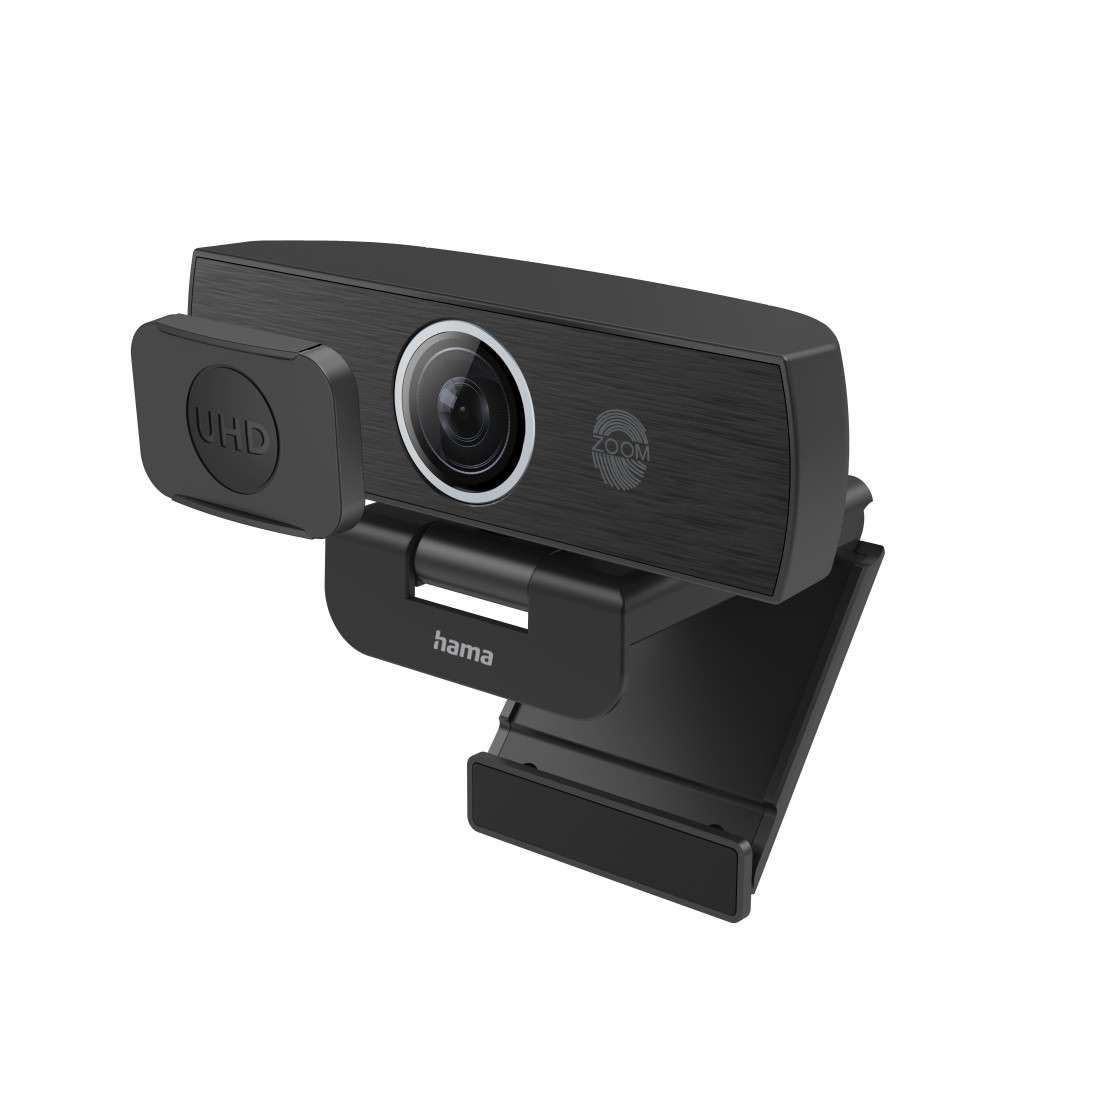 HAMA PC-Webcam C-900 Pro, UHD 4K, 2160p, USB-C, für Streaming